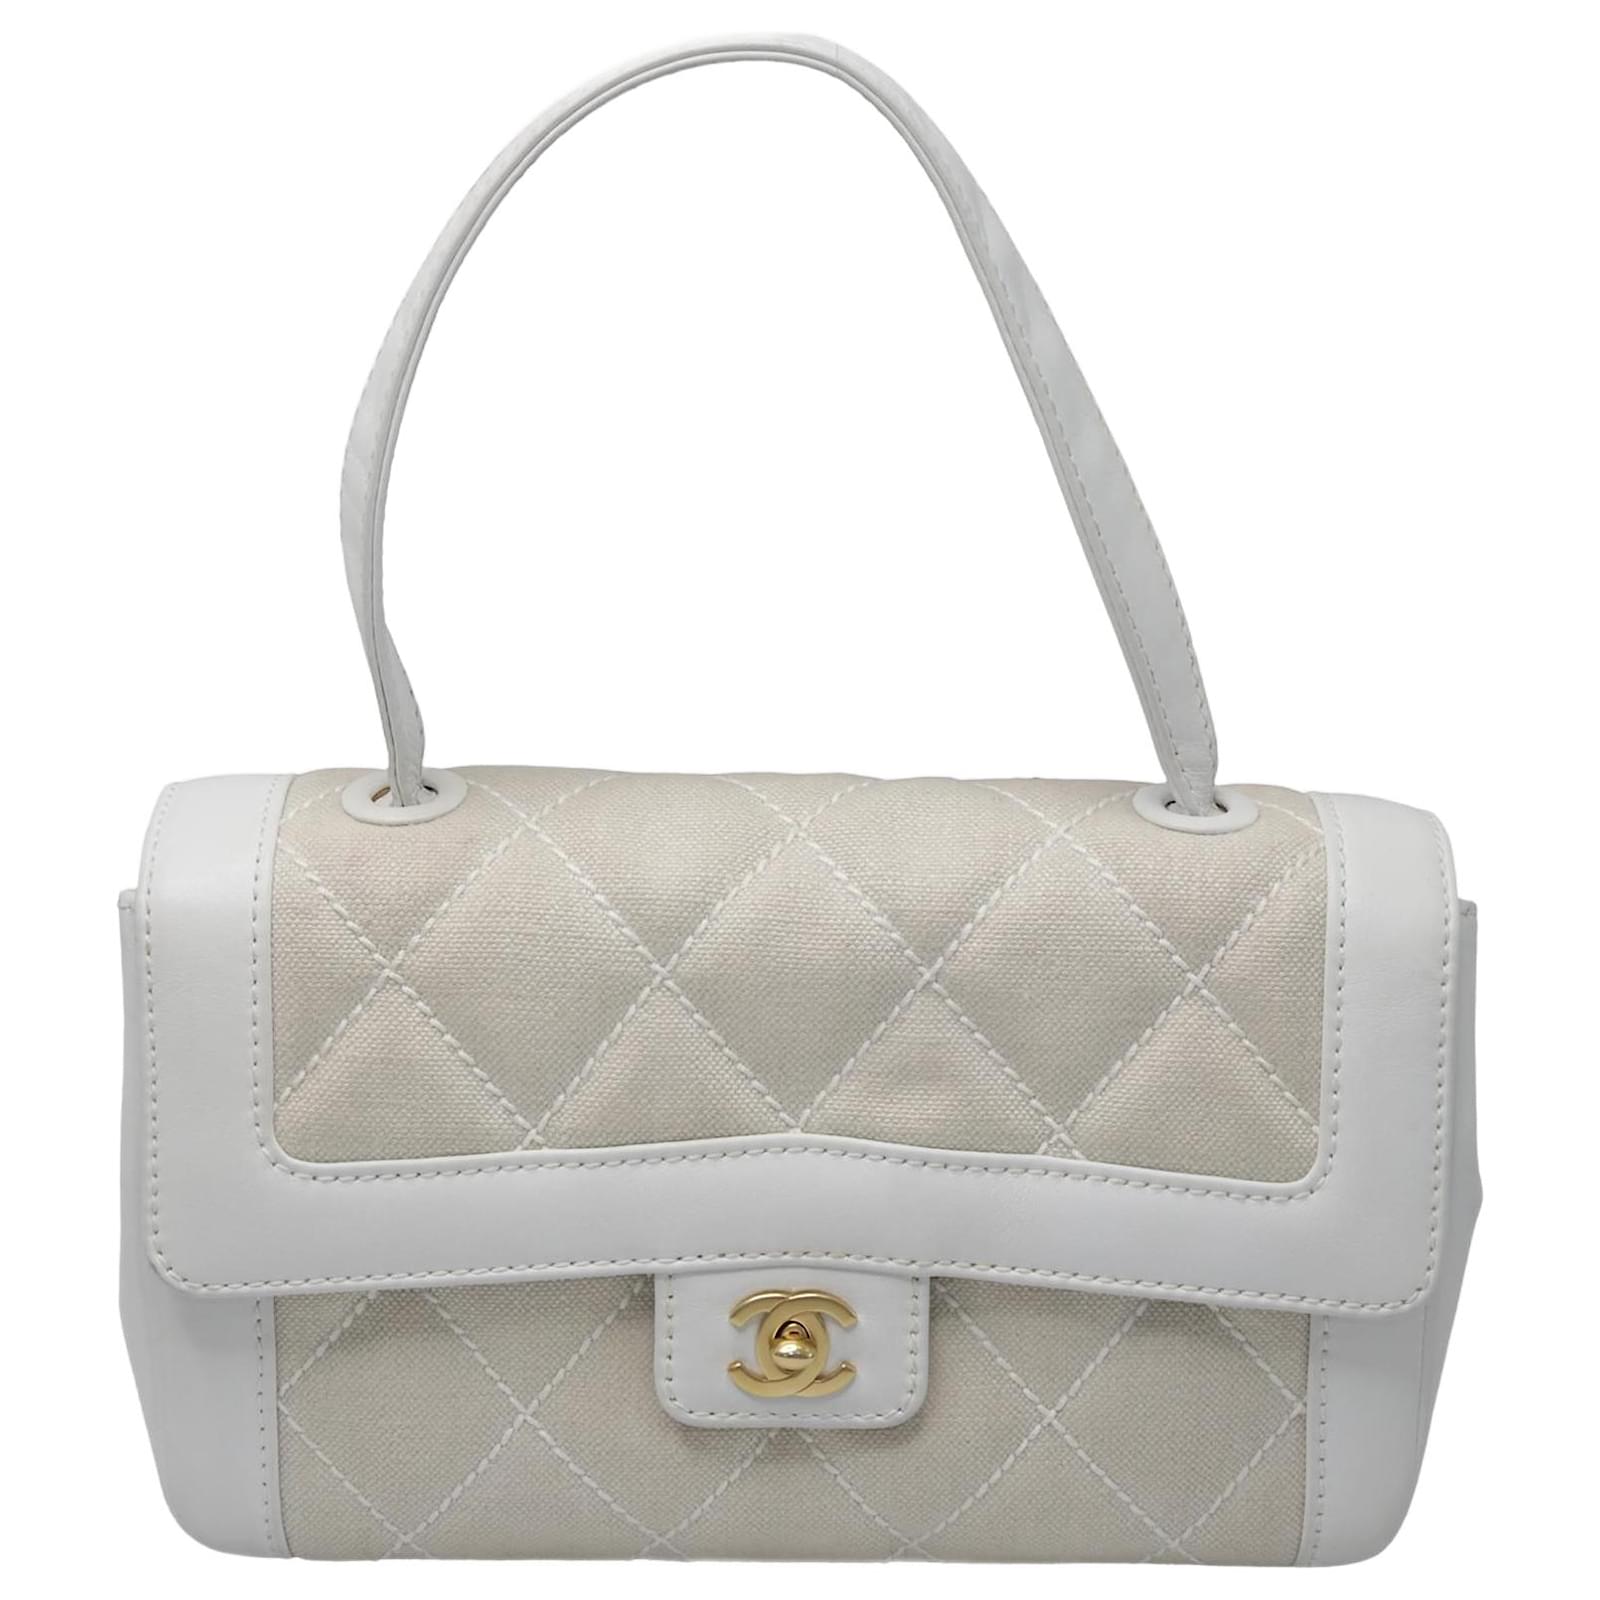 Chanel Beige/White Wild Stitch Surpique Top Handle Flap Bag